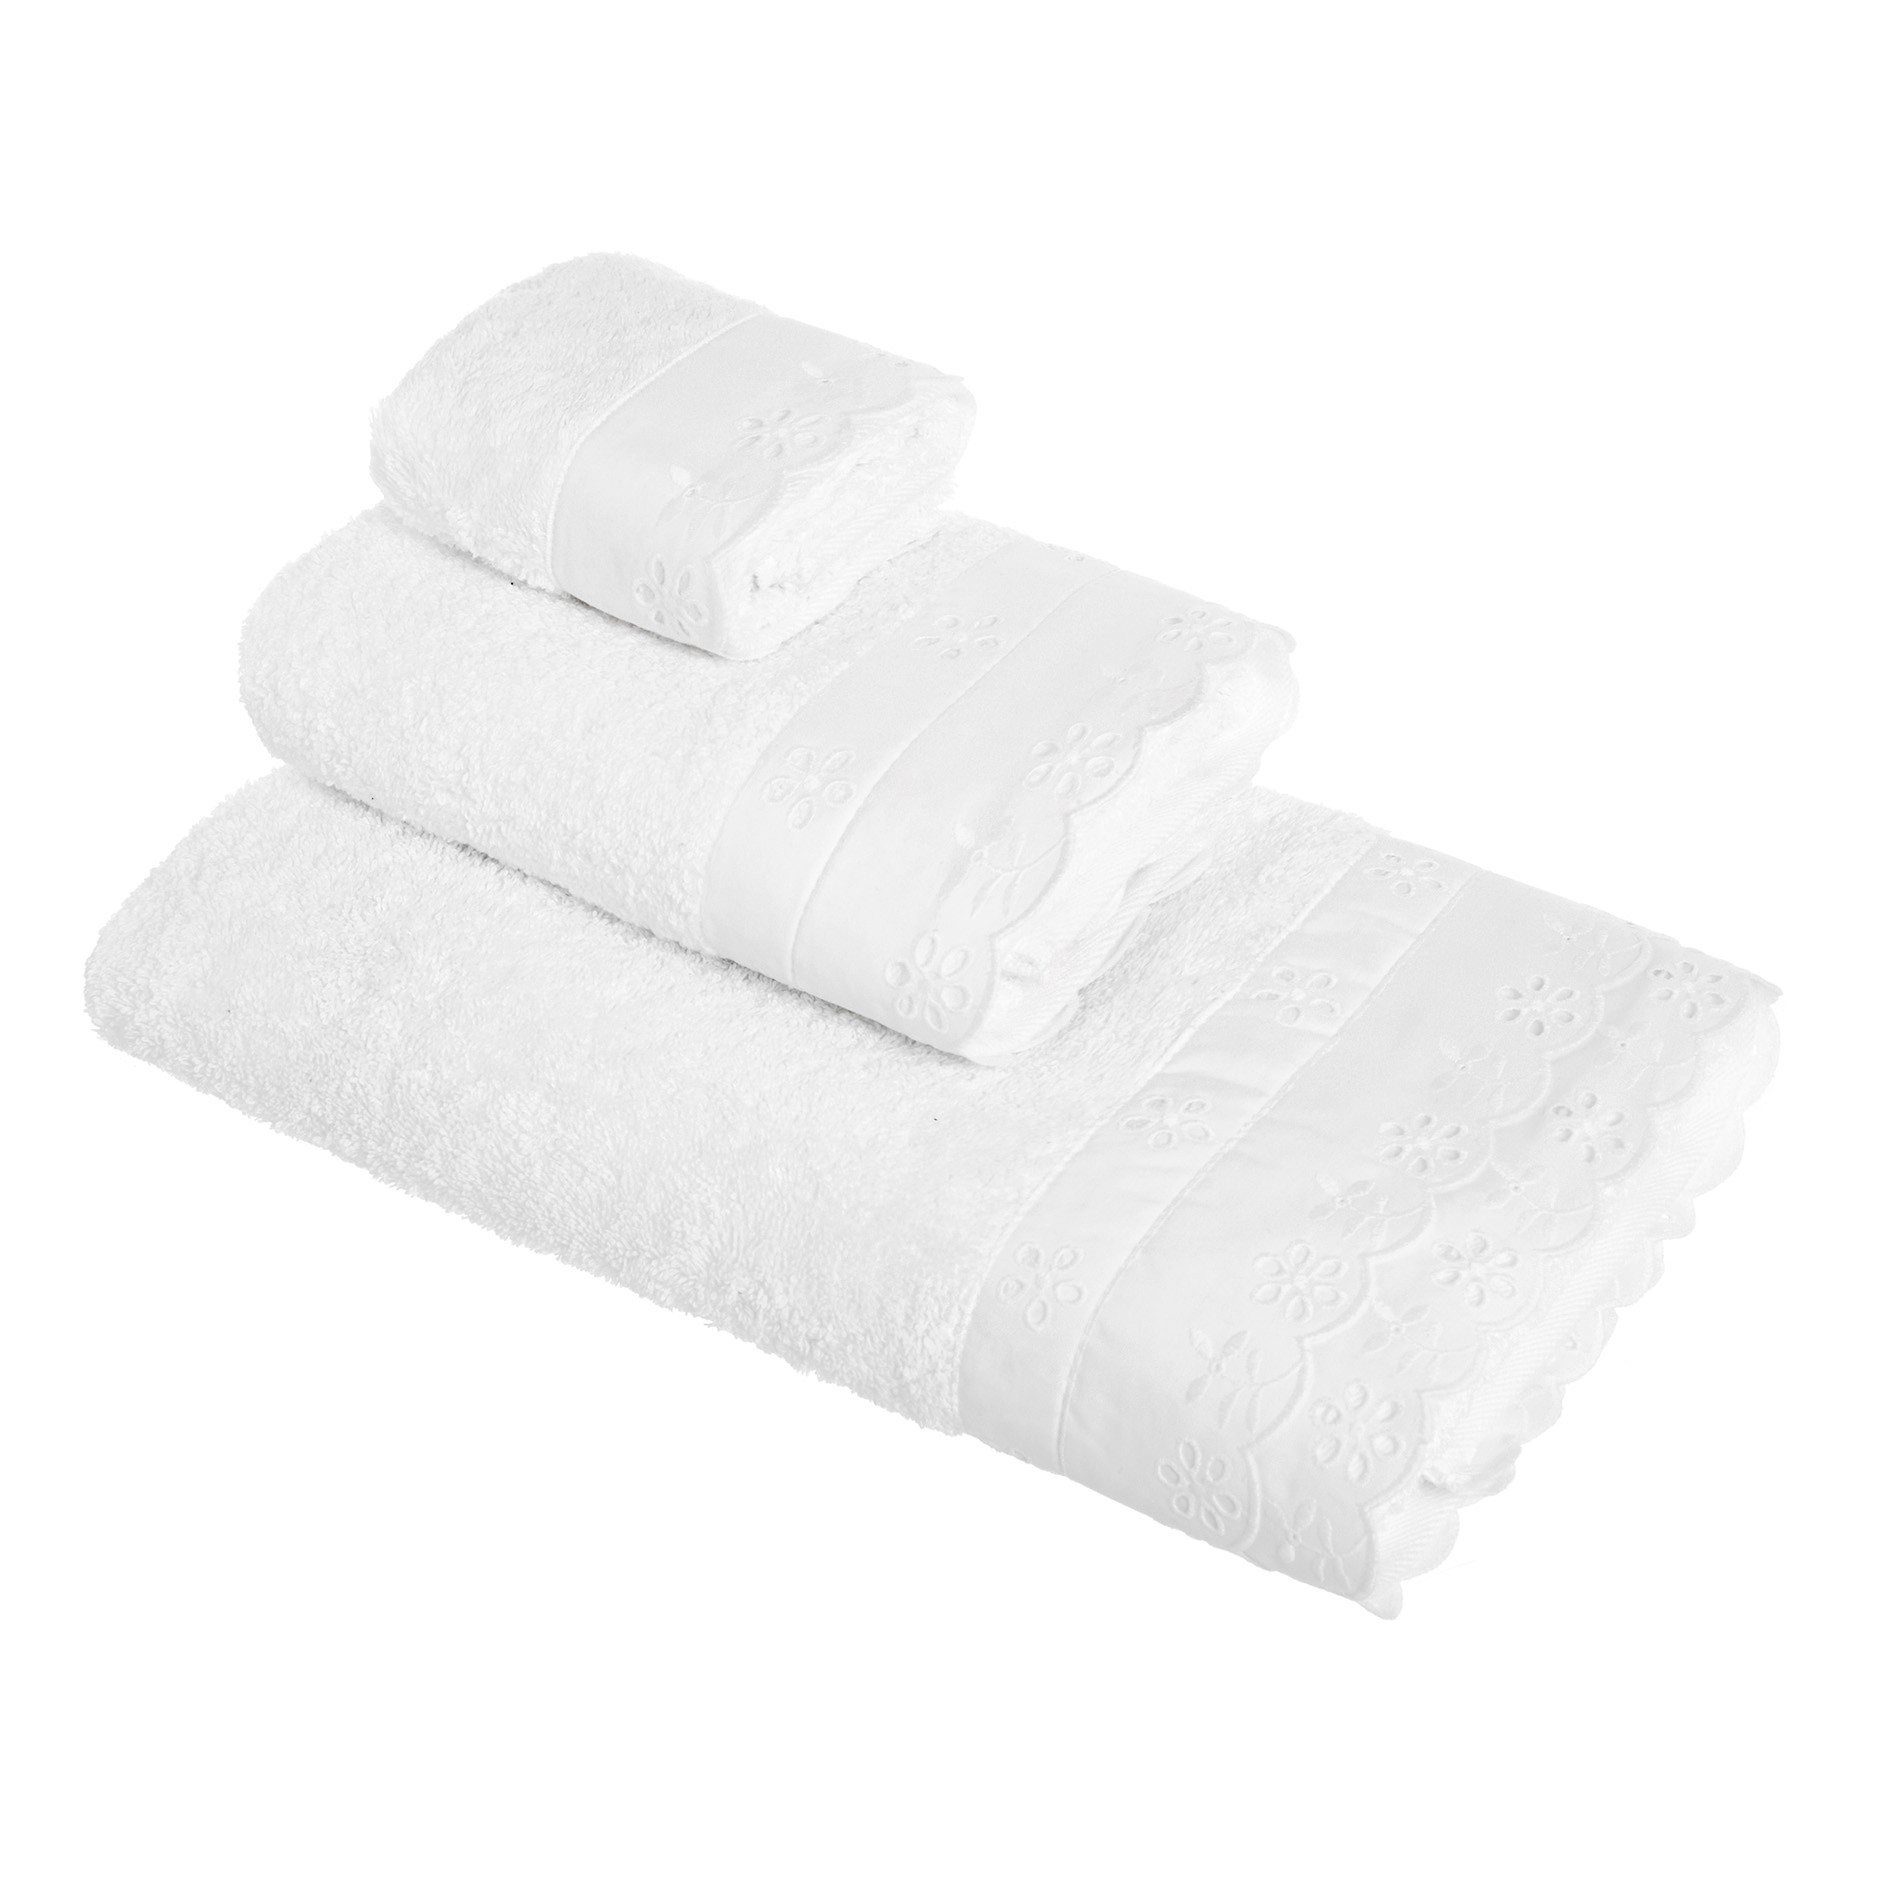 Portofino broderie towel, White, large image number 0